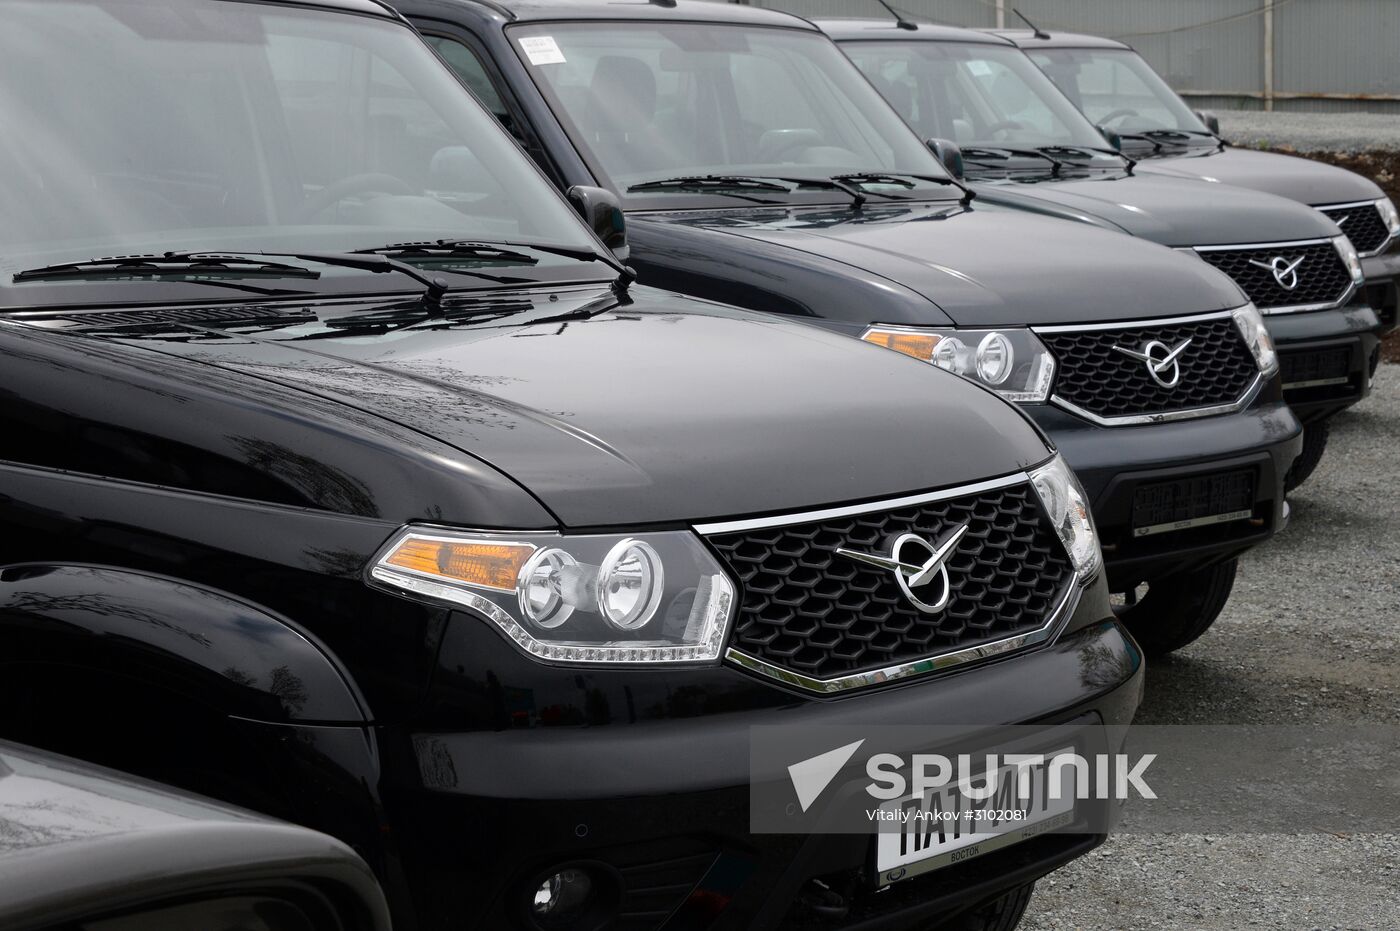 Vostok UAZ car dealership opens in Vladivostok